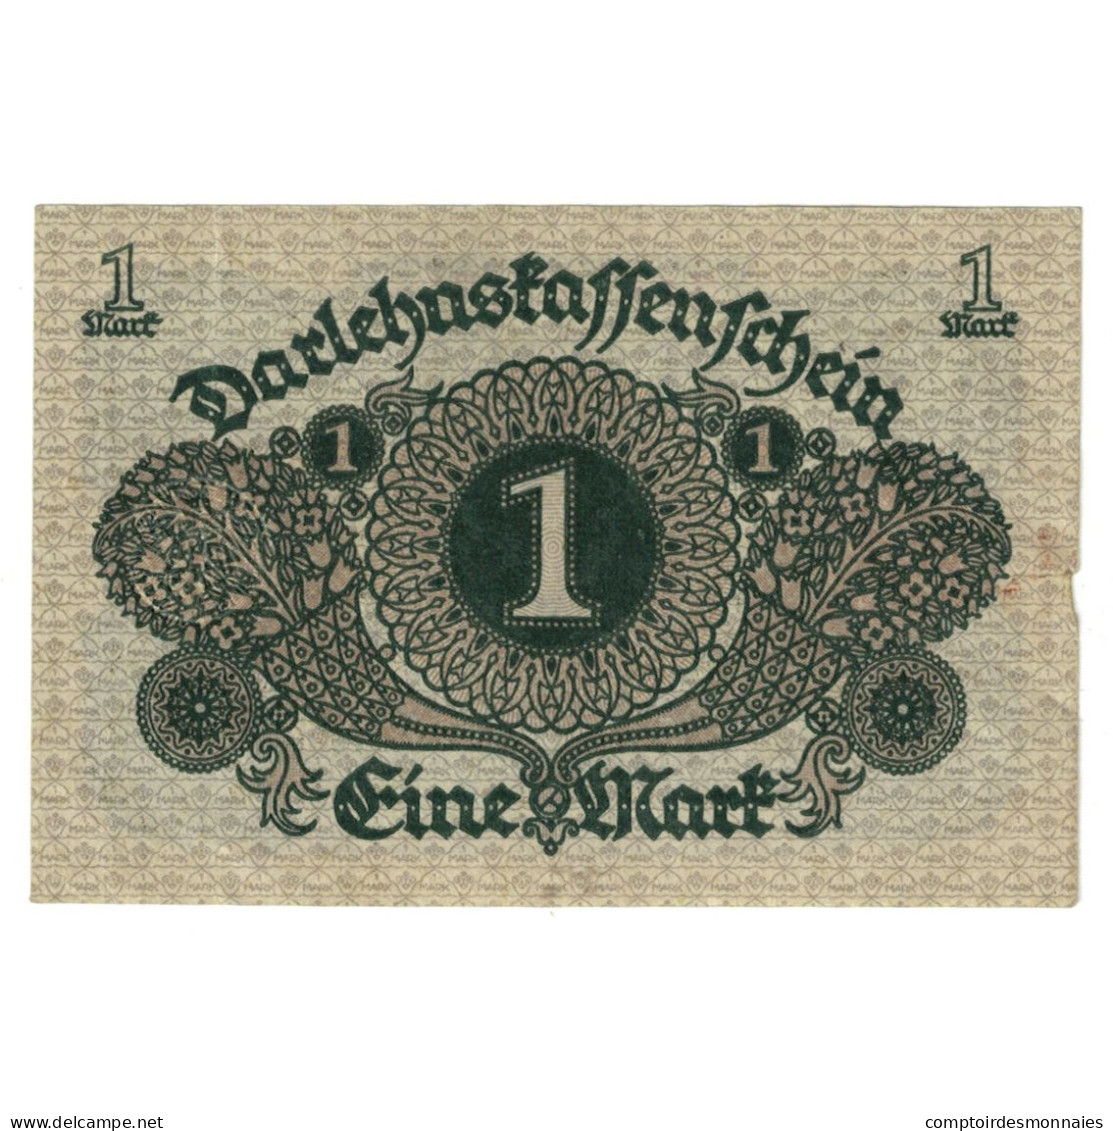 Billet, Allemagne, 1 Mark, KM:58, SUP - 1 Rentenmark